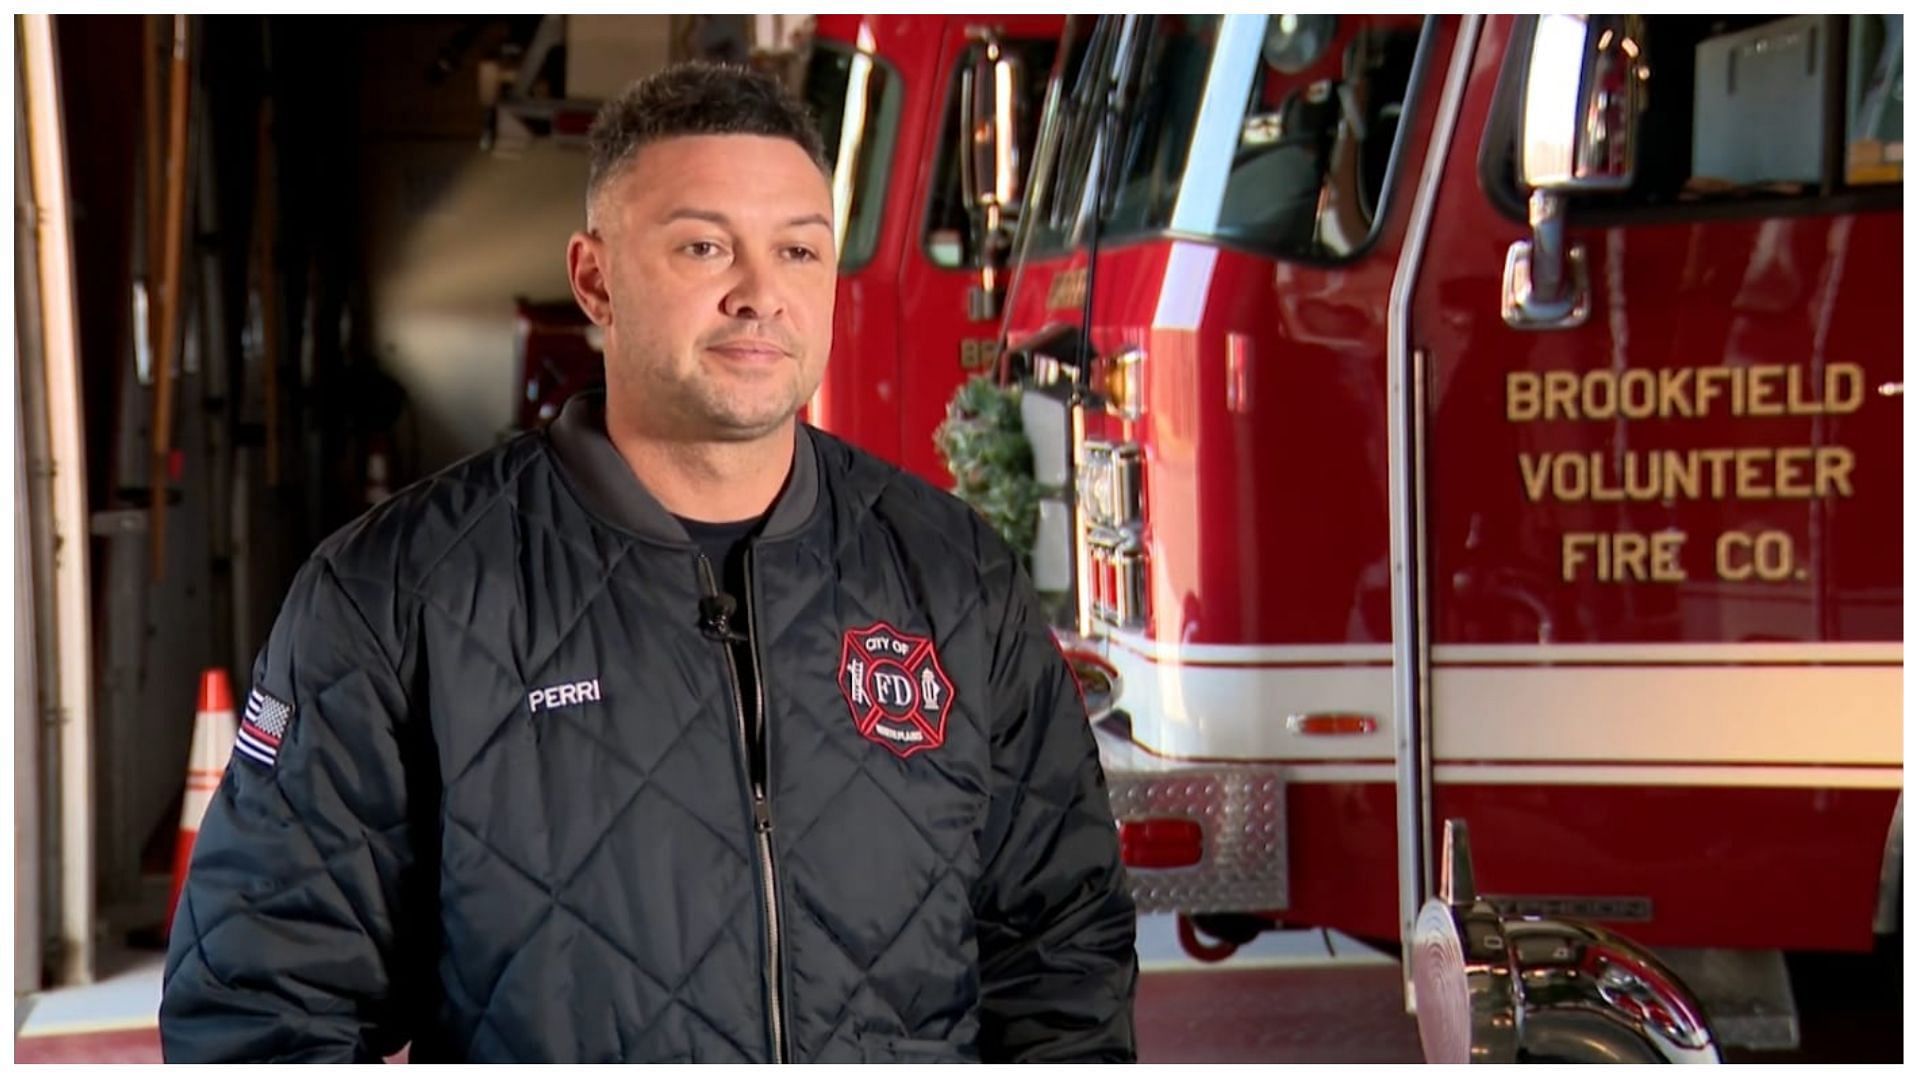 Off-duty fireman Nicholas Perri Jr. saved a woman trapped in fiery crash, (image via YouTube)